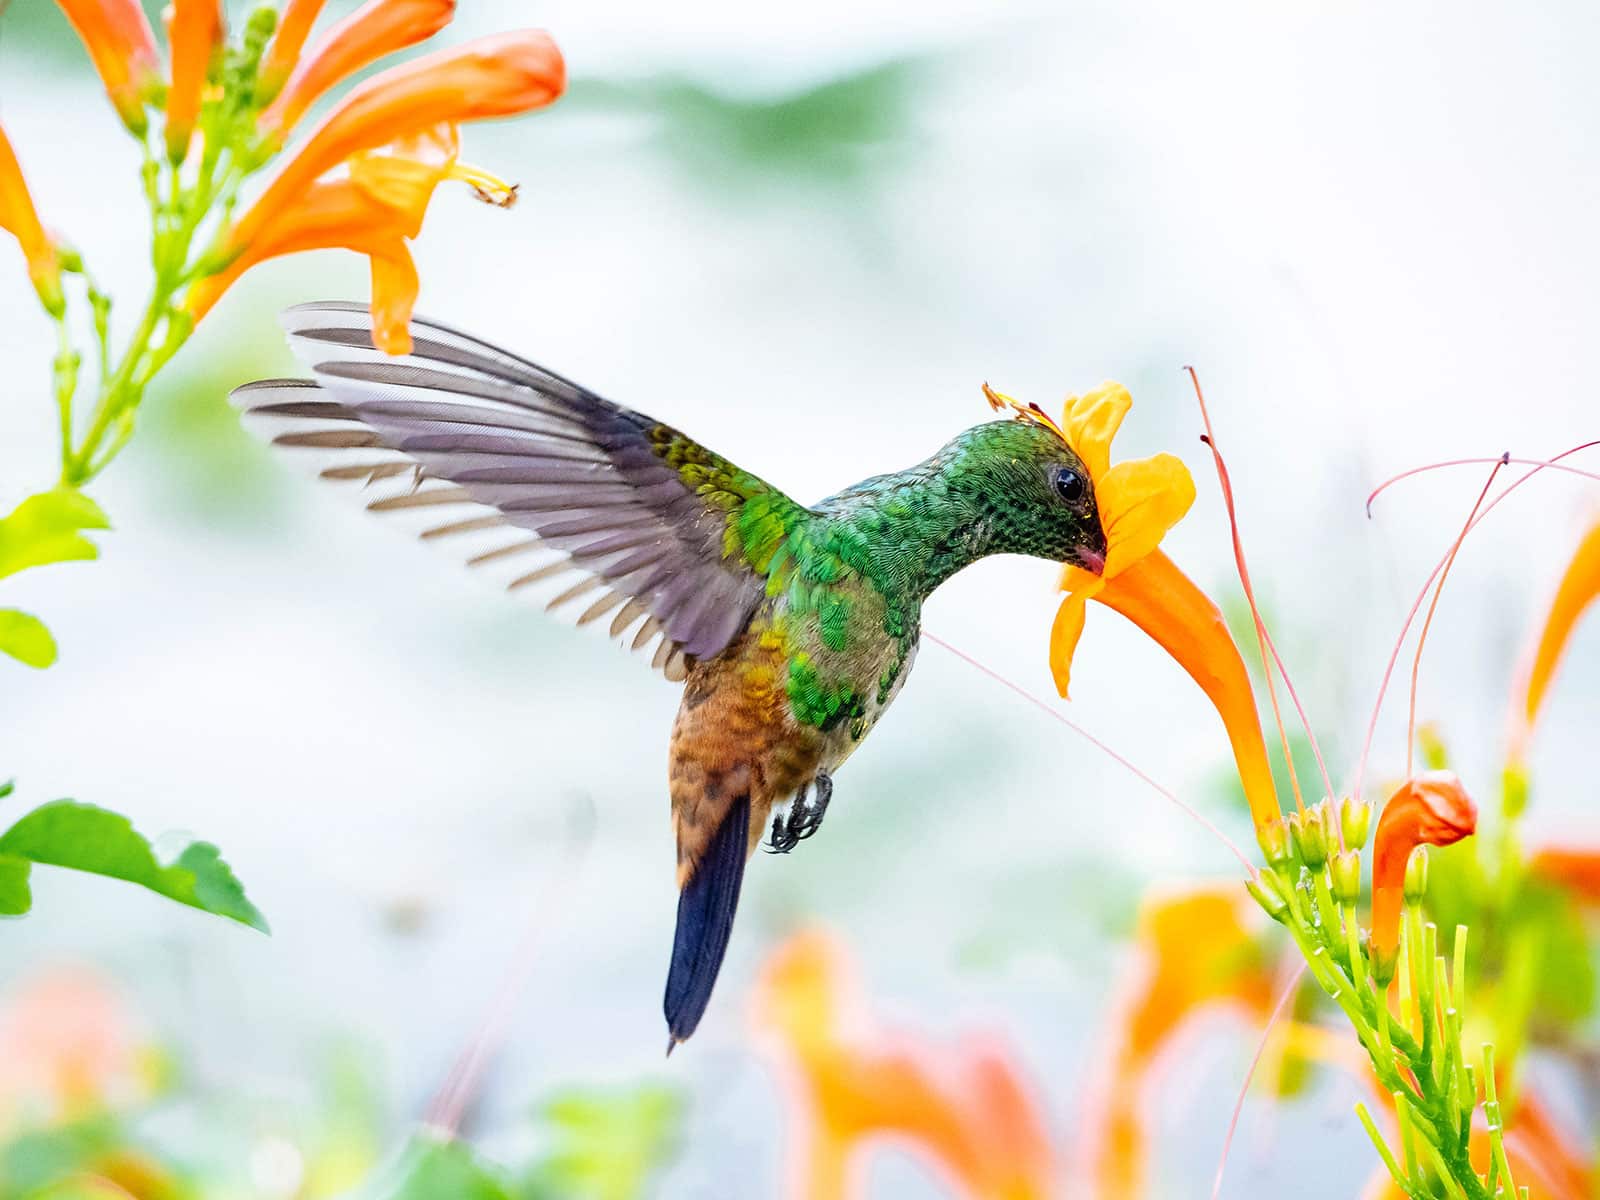 Flowers that hummingbirds love